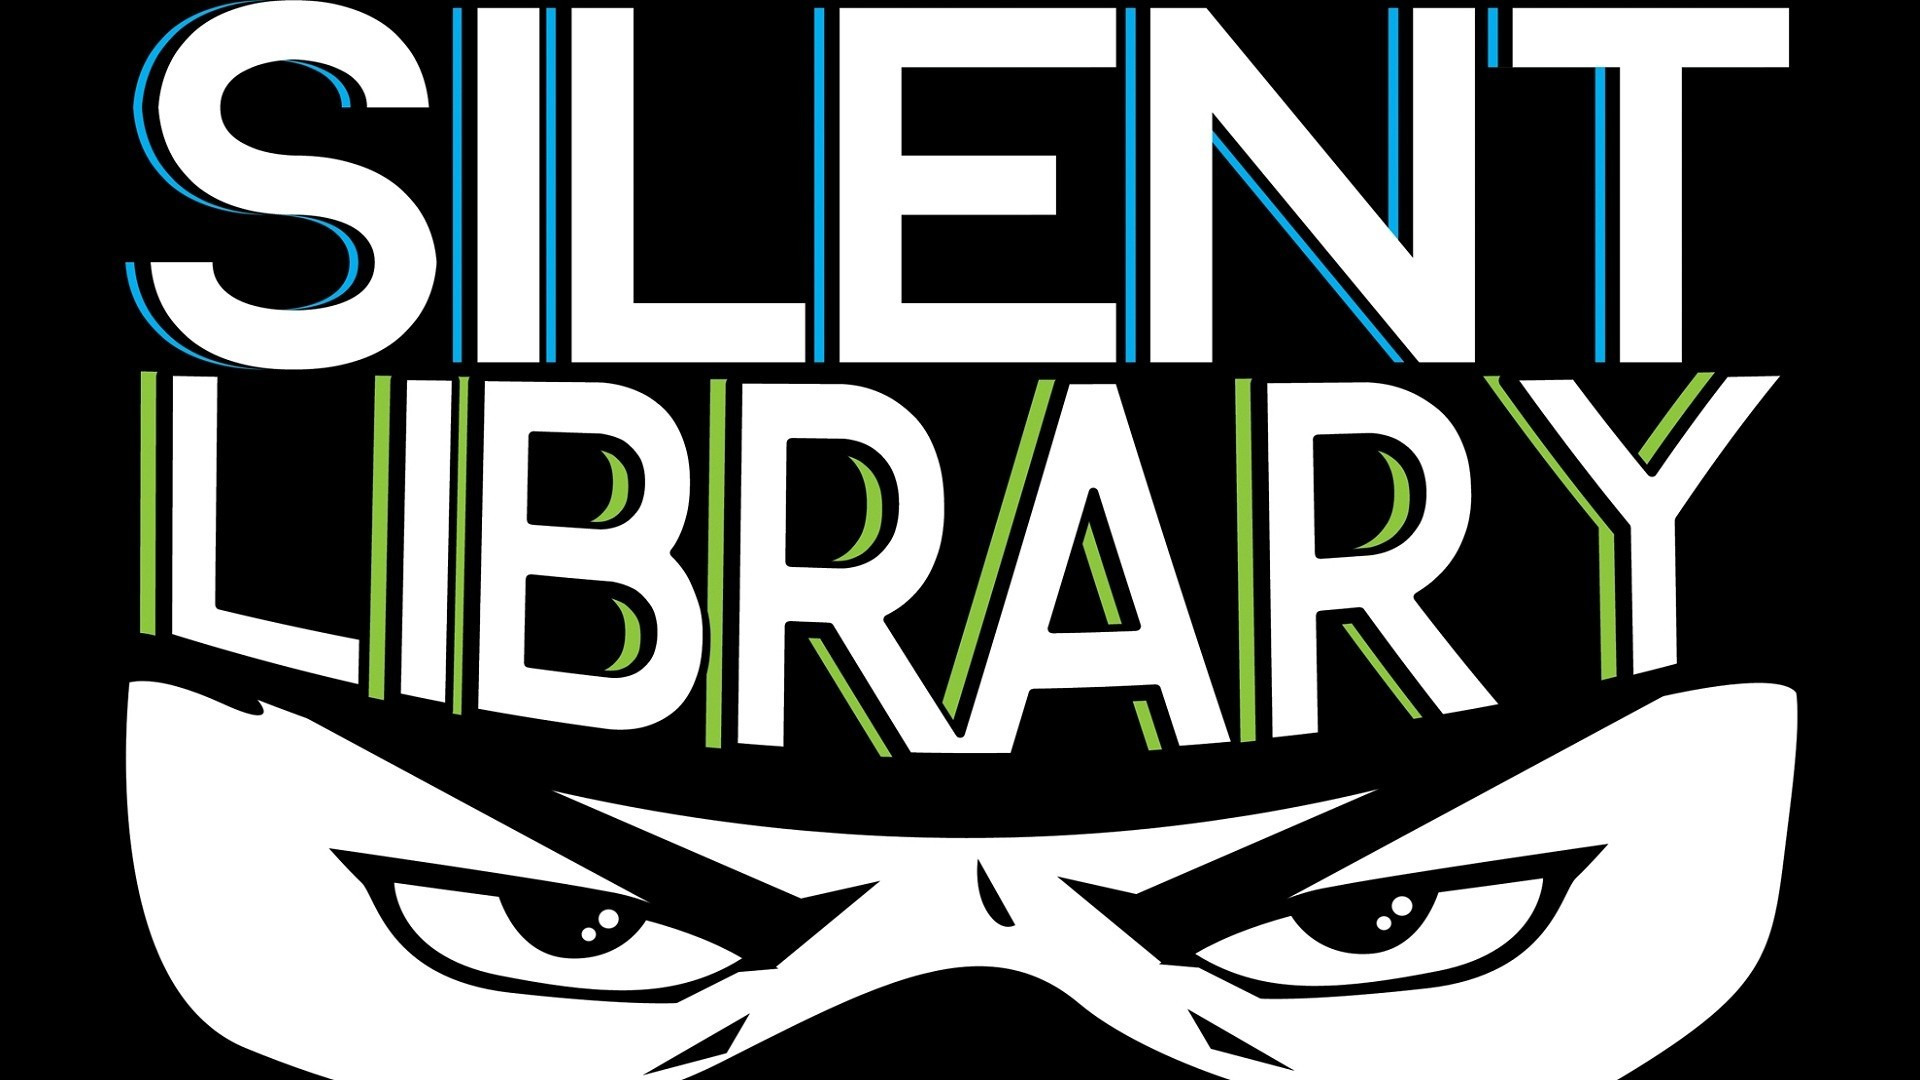 Сериал Silent Library